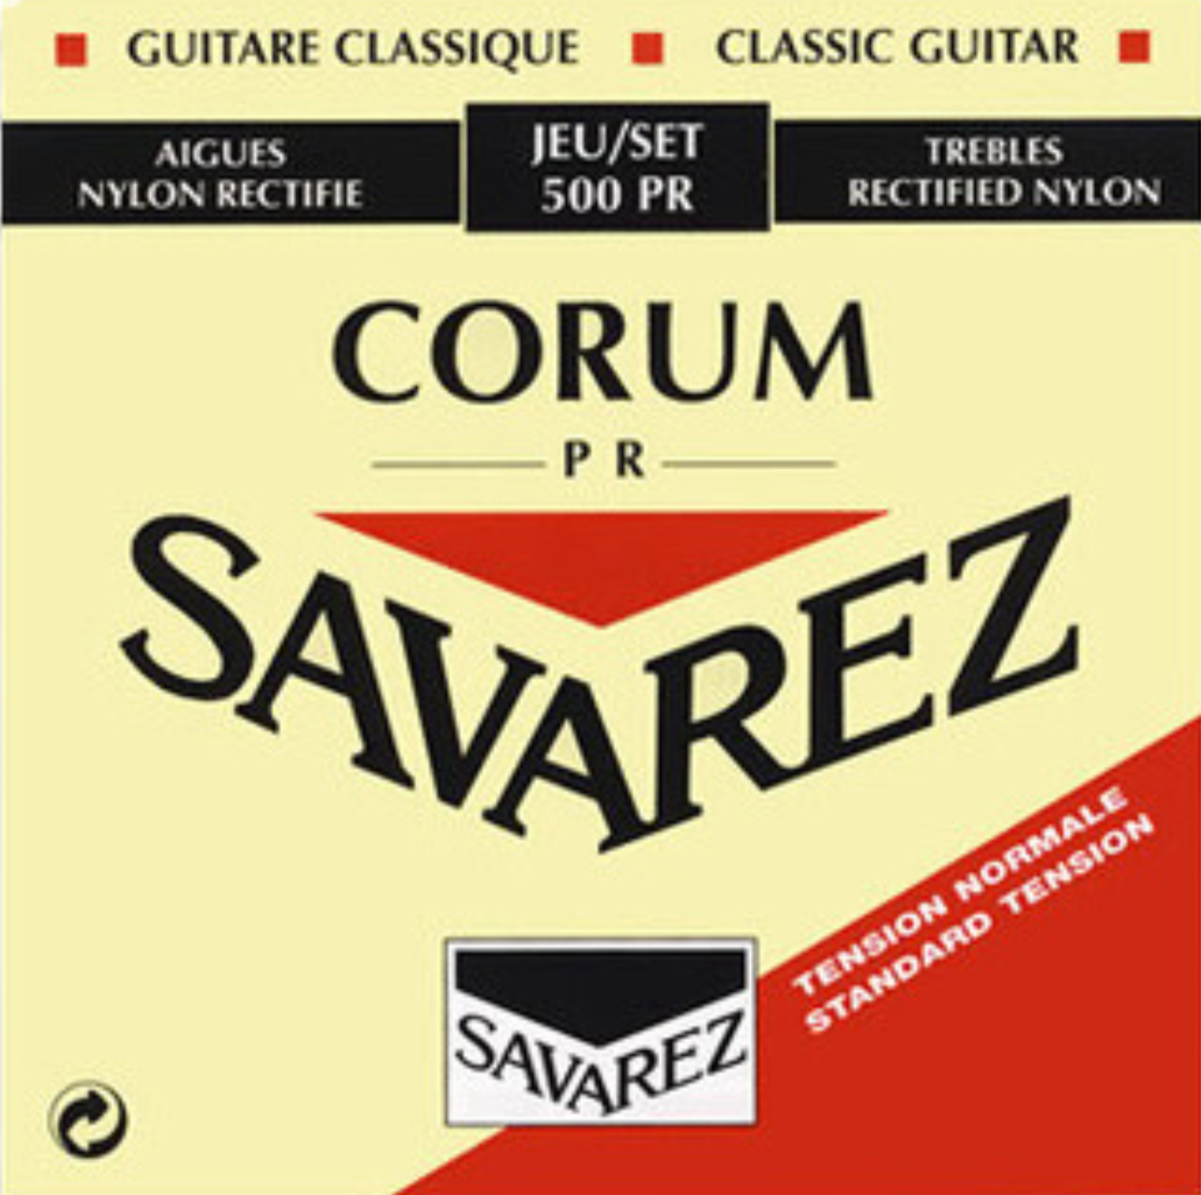 Savarez 500PR Rectified Trebles Corum Normal Tension Classical Guitar Strings (Made In France)